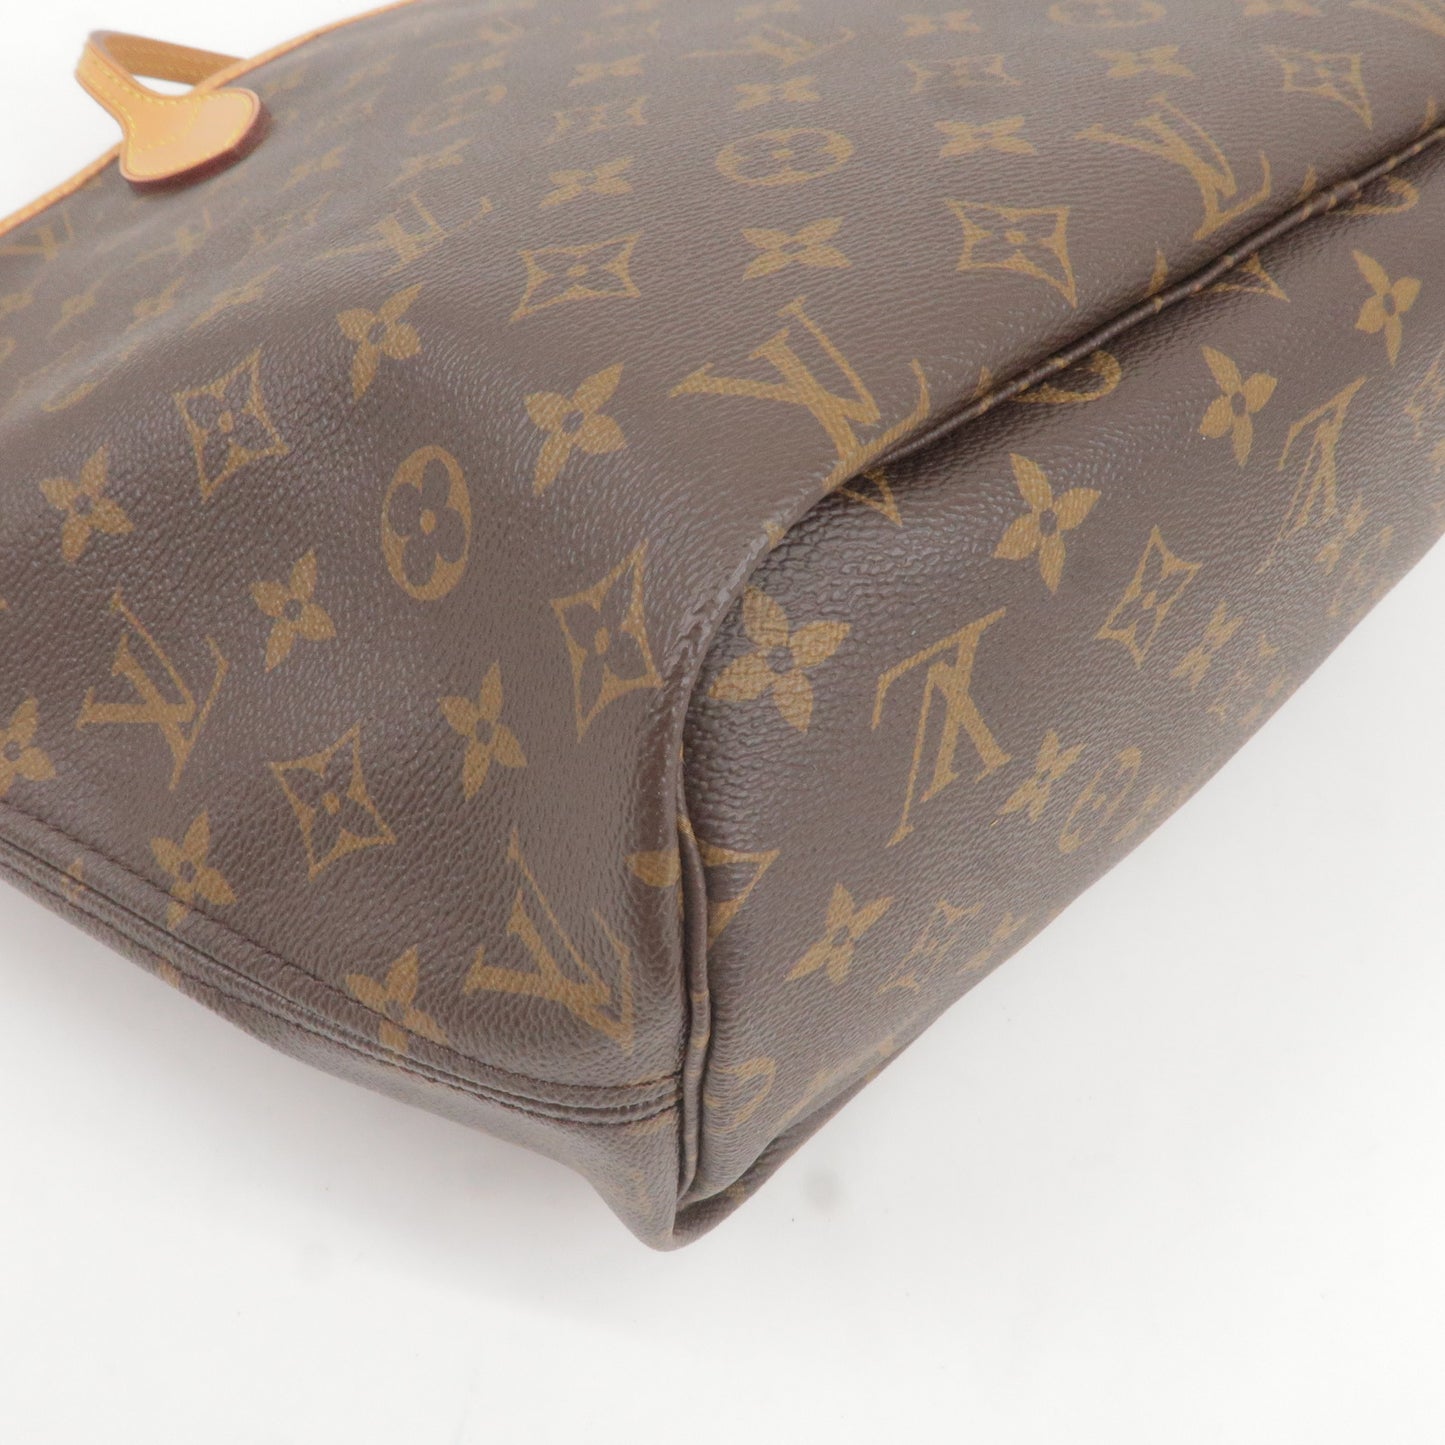 Louis Vuitton Monogram Neverfull MM Tote Bag M40995